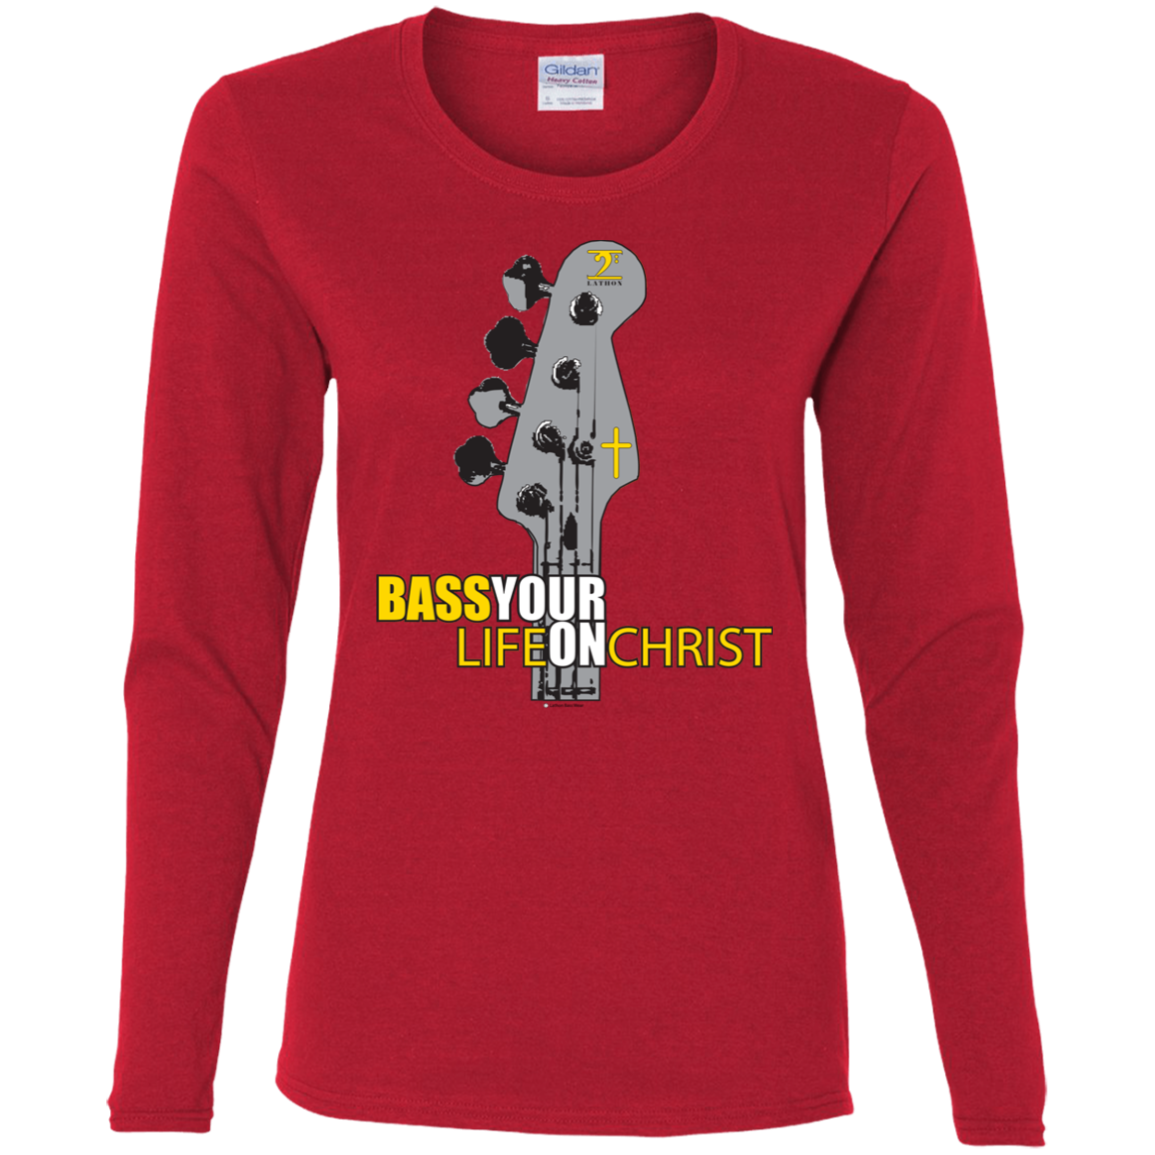 BASS YOUR LIFE ON CHRIST Ladies' Cotton LS T-Shirt - Lathon Bass Wear